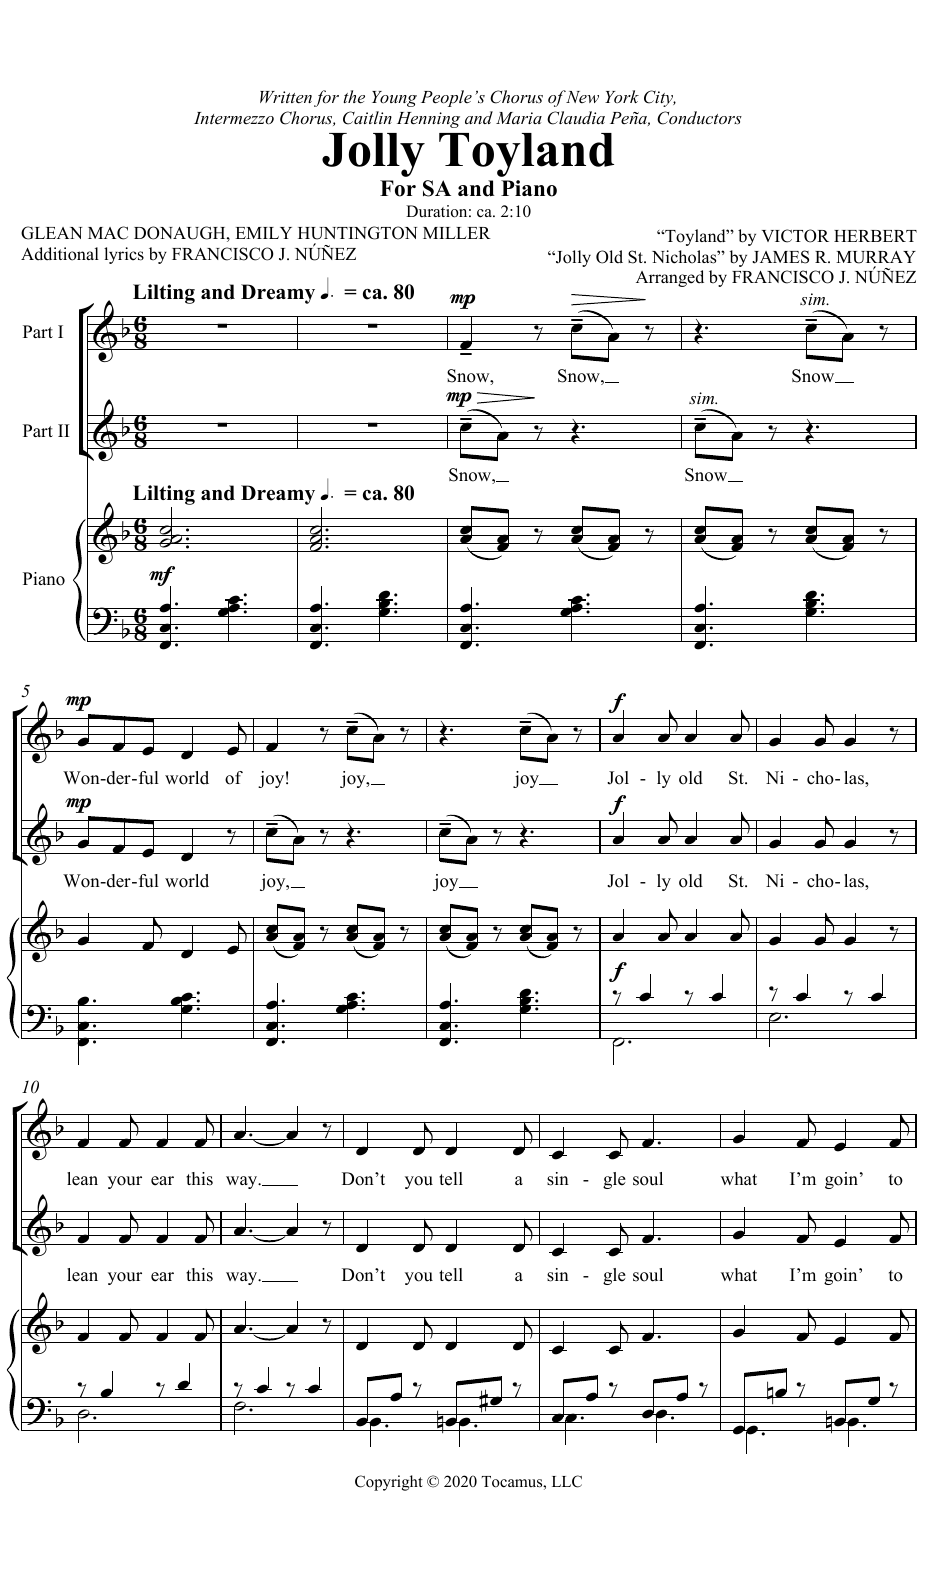 Francisco J. Núñez Jolly Toyland Sheet Music Notes & Chords for 2-Part Choir - Download or Print PDF